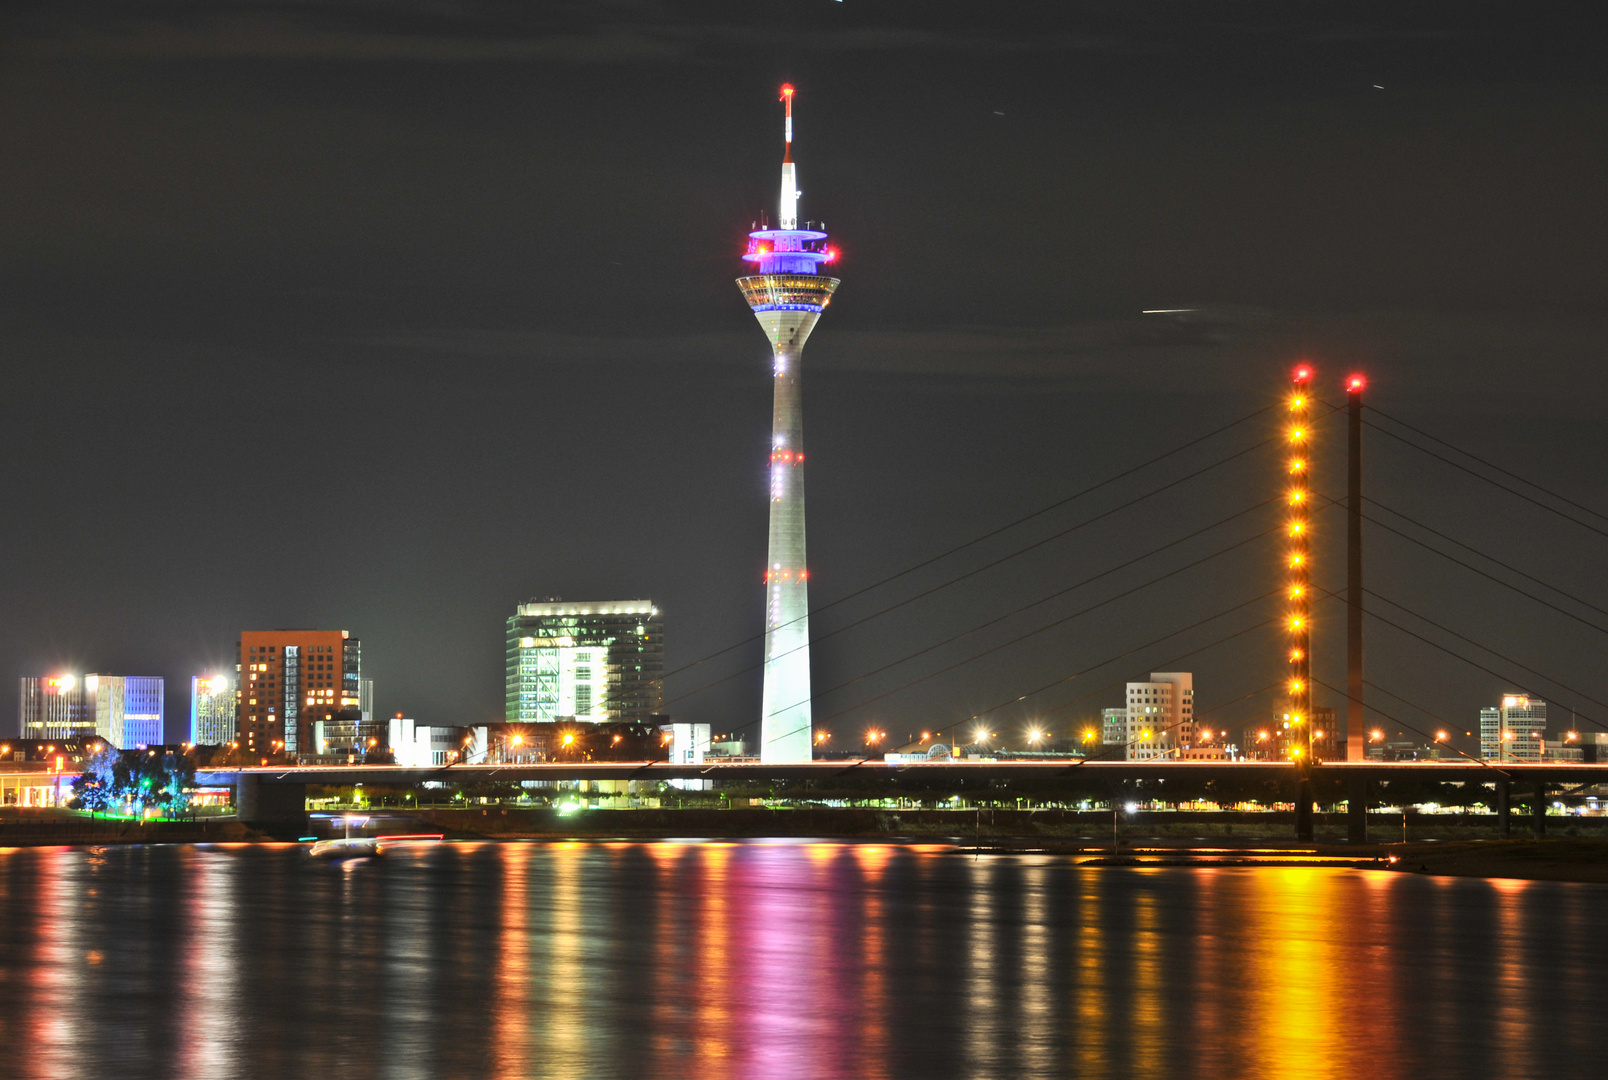 Düsseldorf Skyline